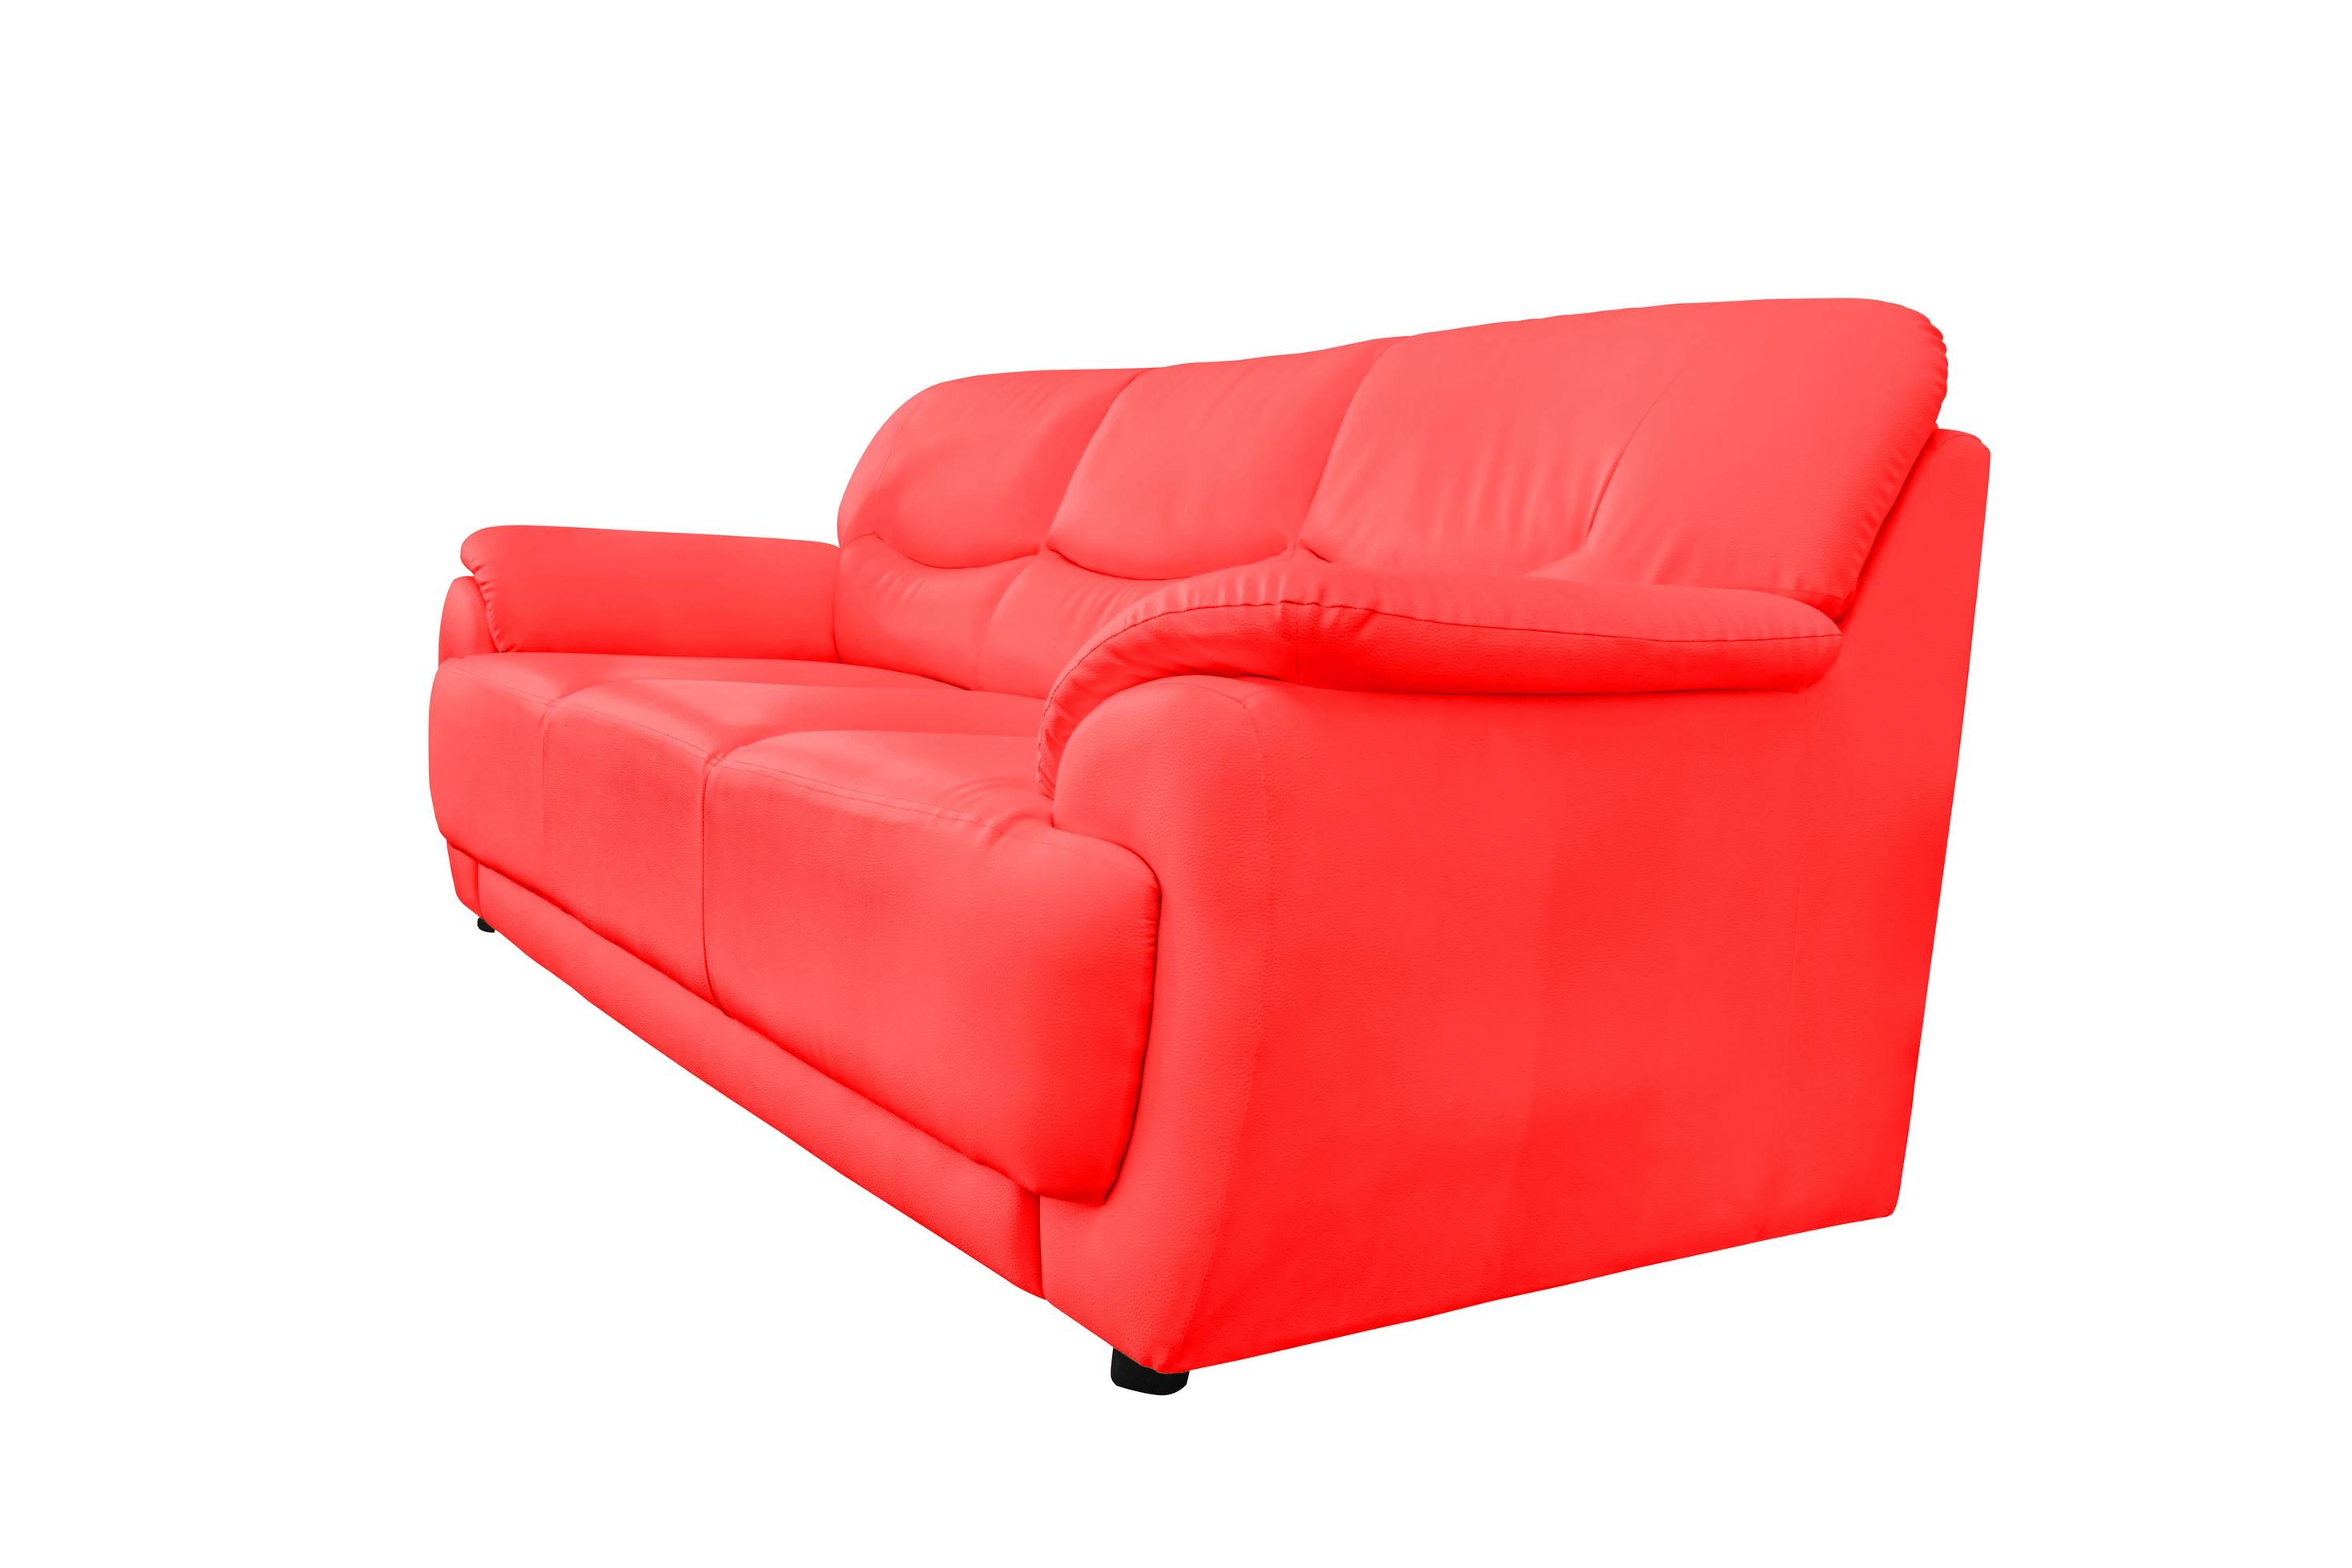 red leather sofa reddit